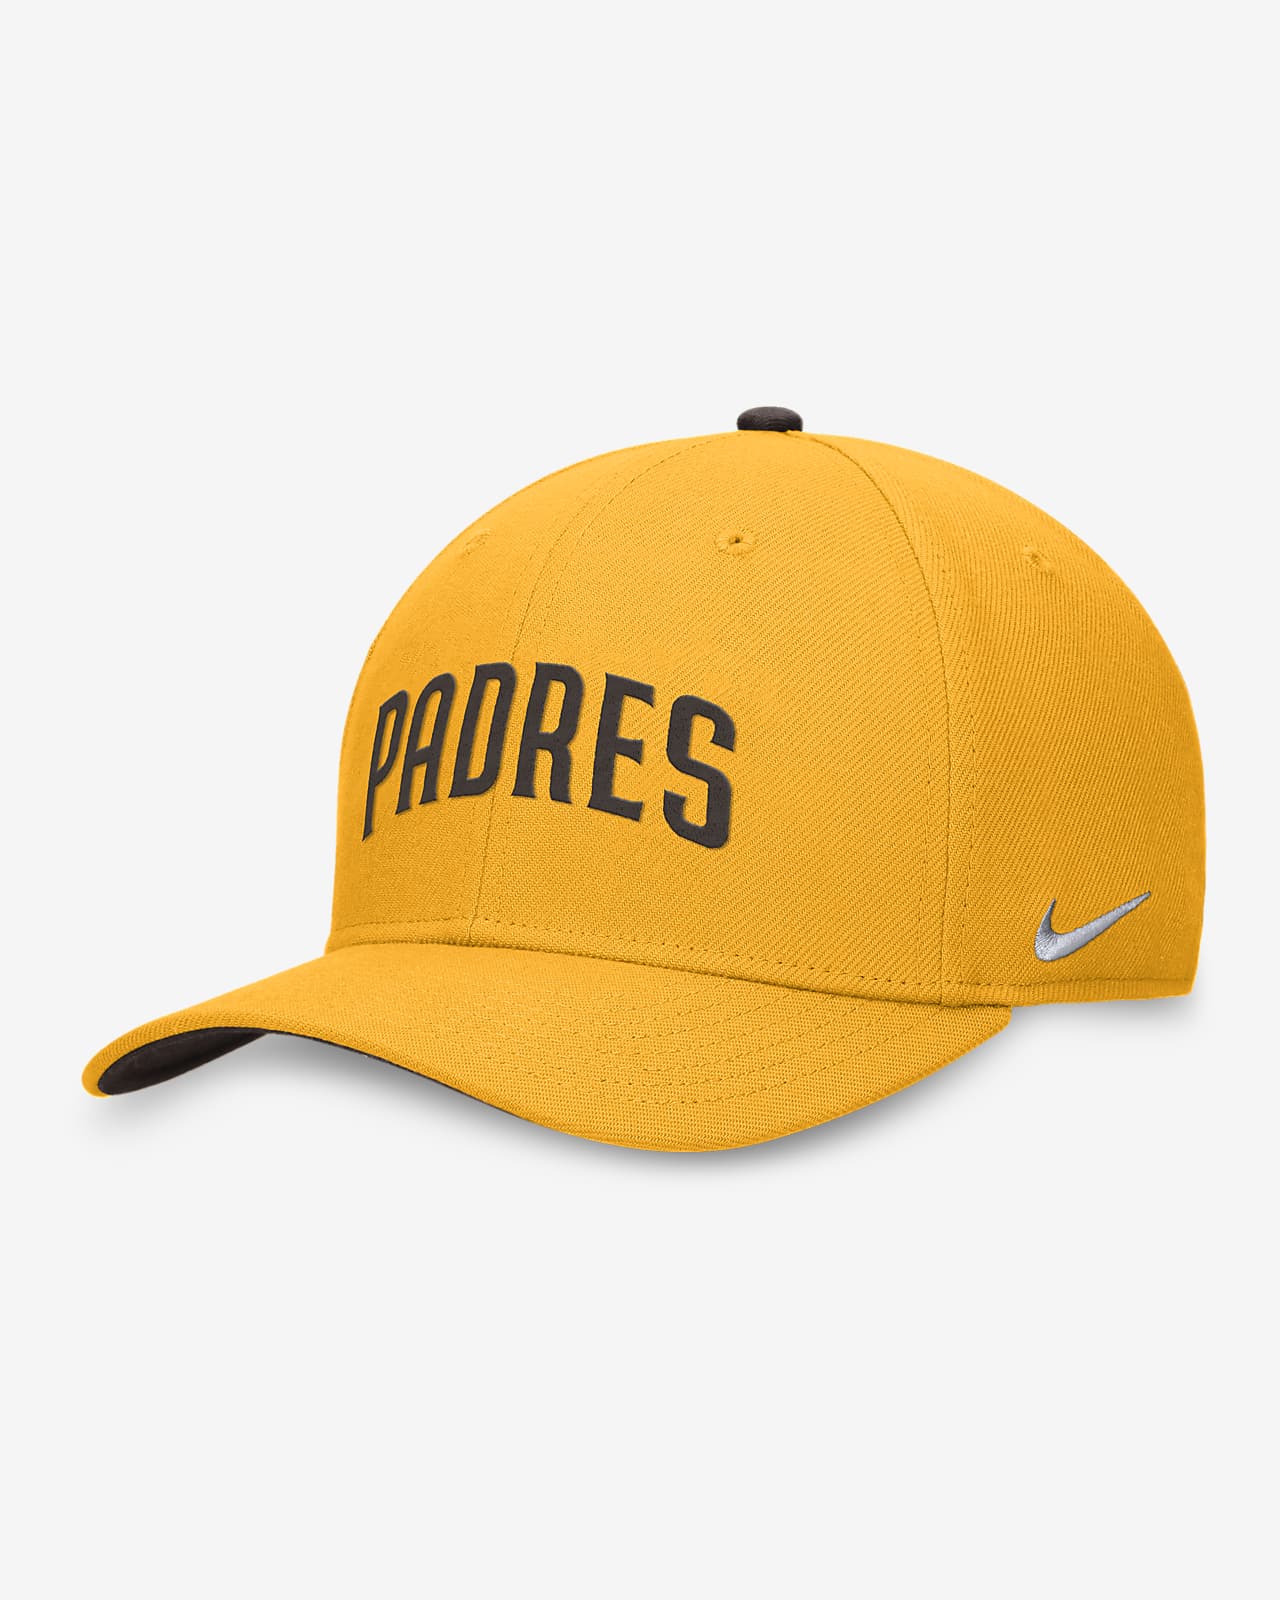 San Diego Padres Hats